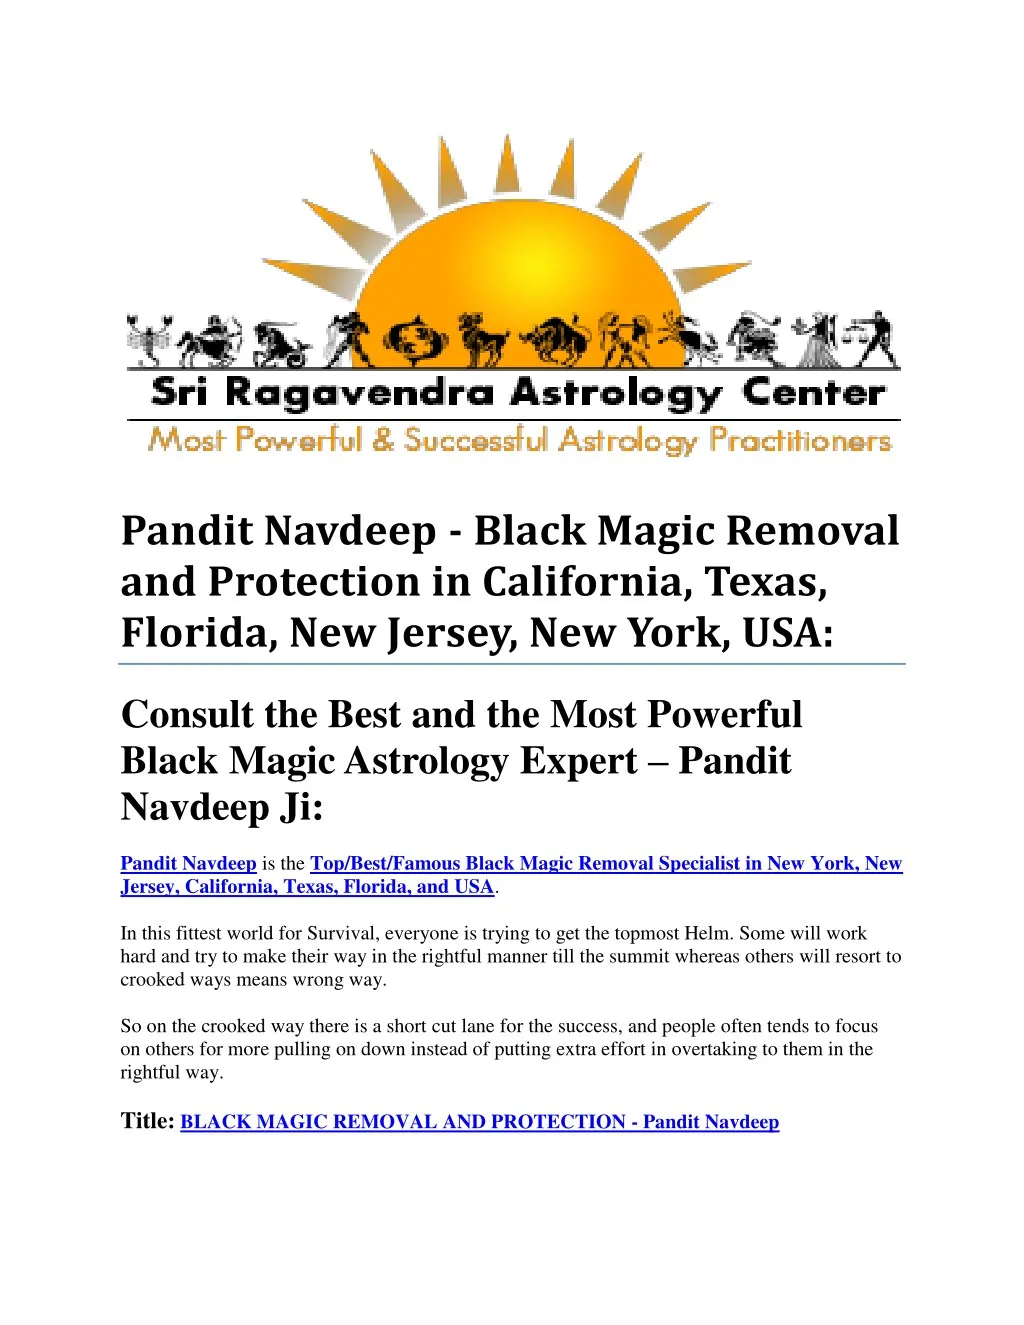 pandit navdeep black magic removal and protection